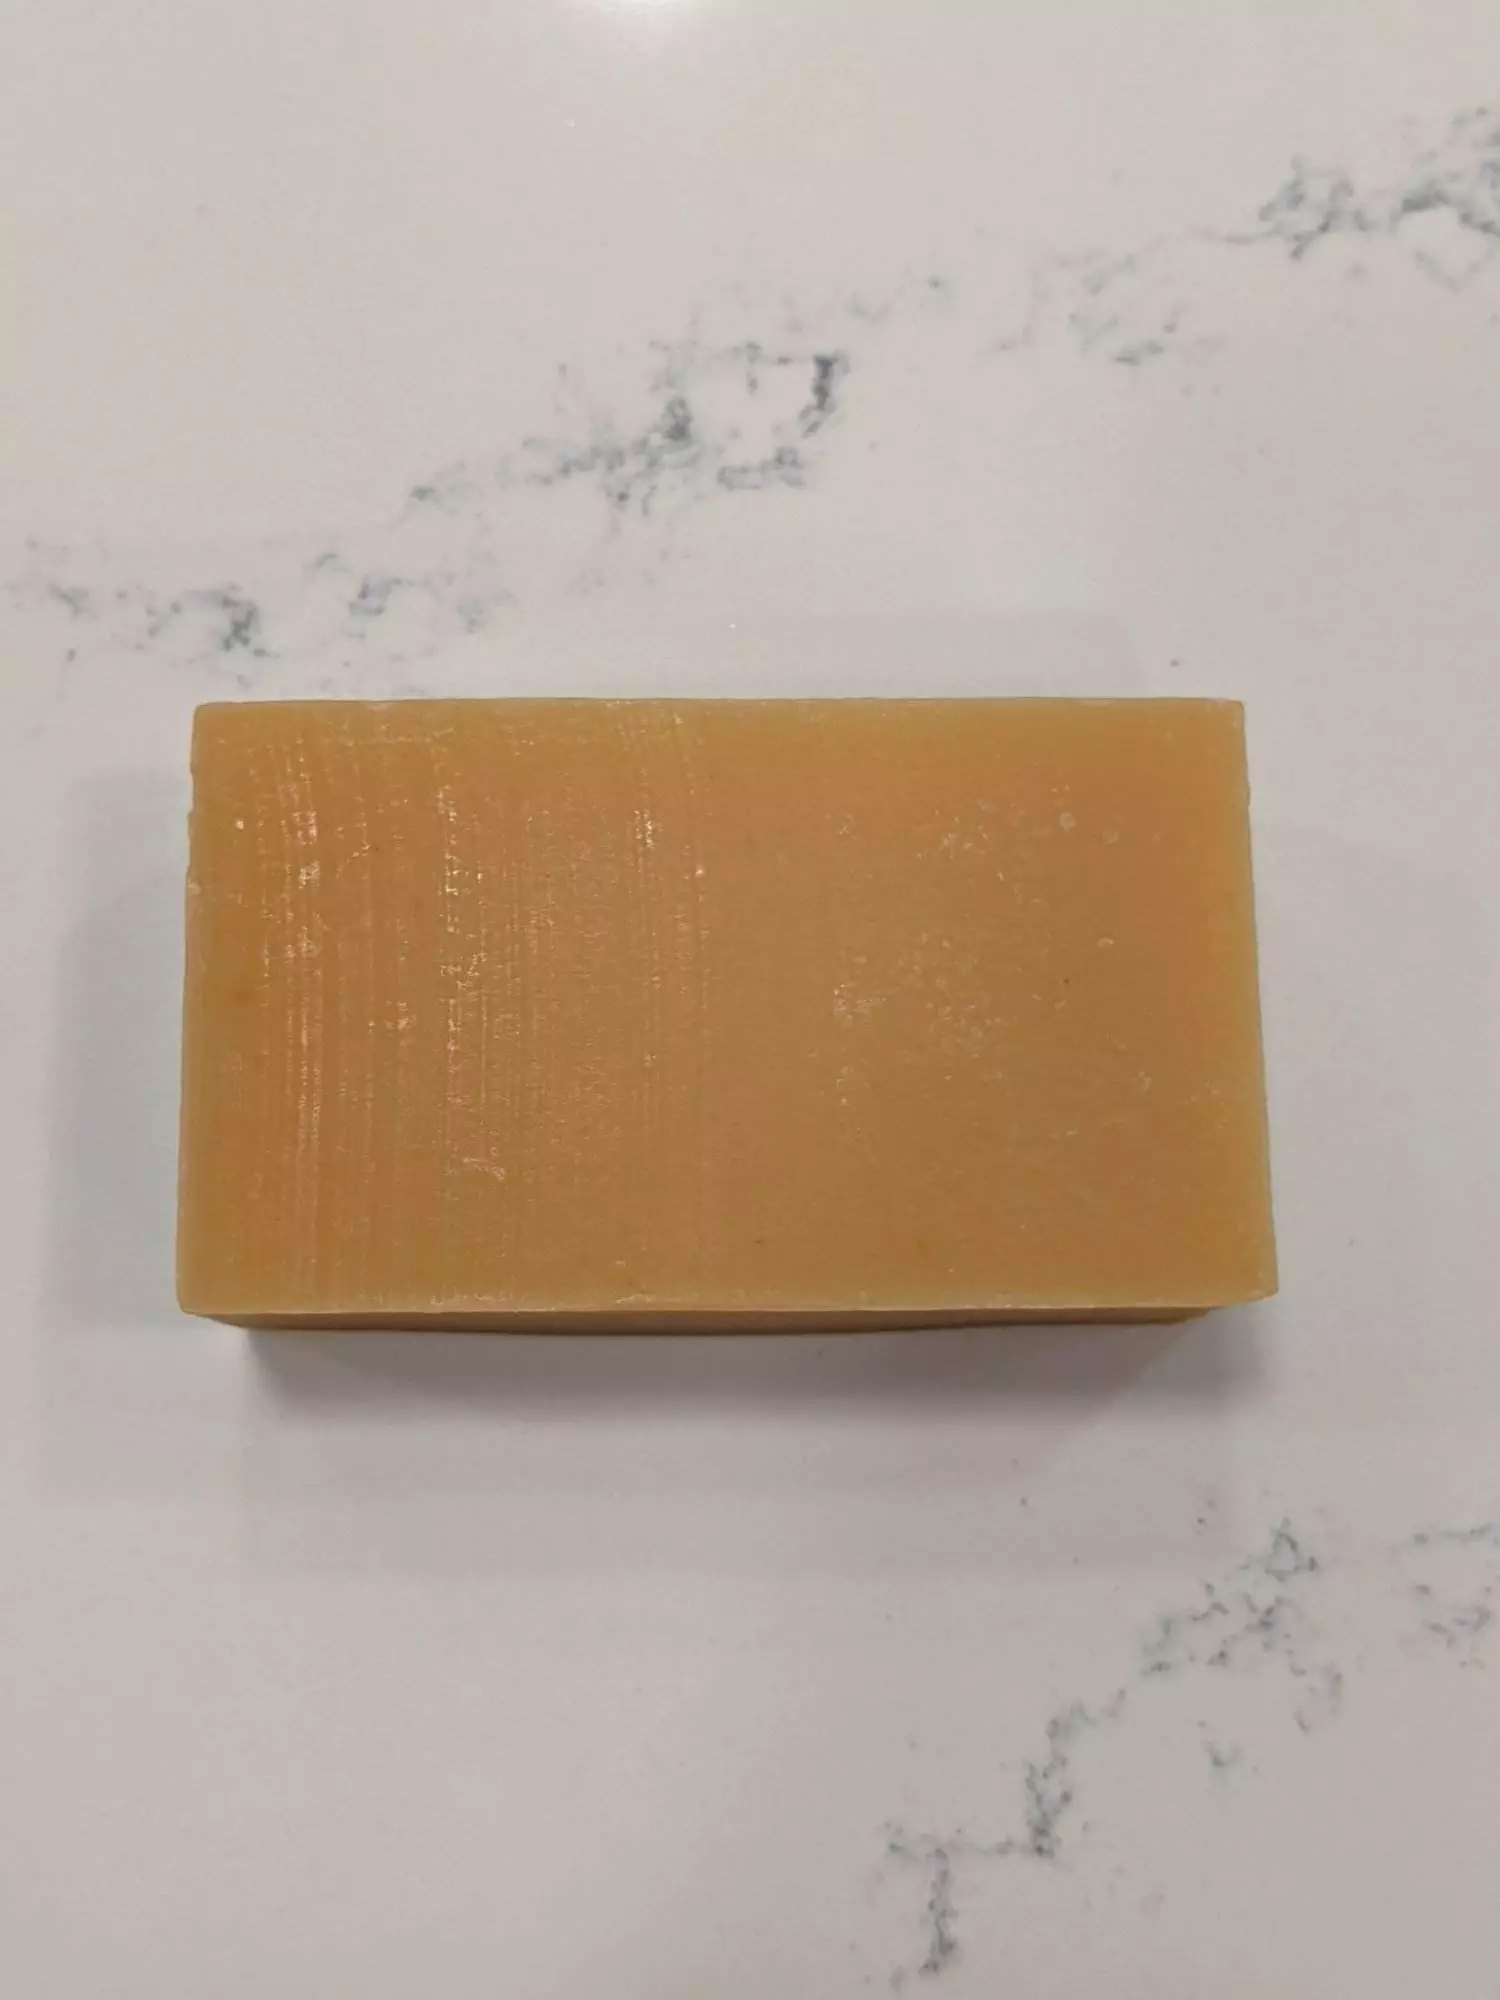 unscented hemp soap bar